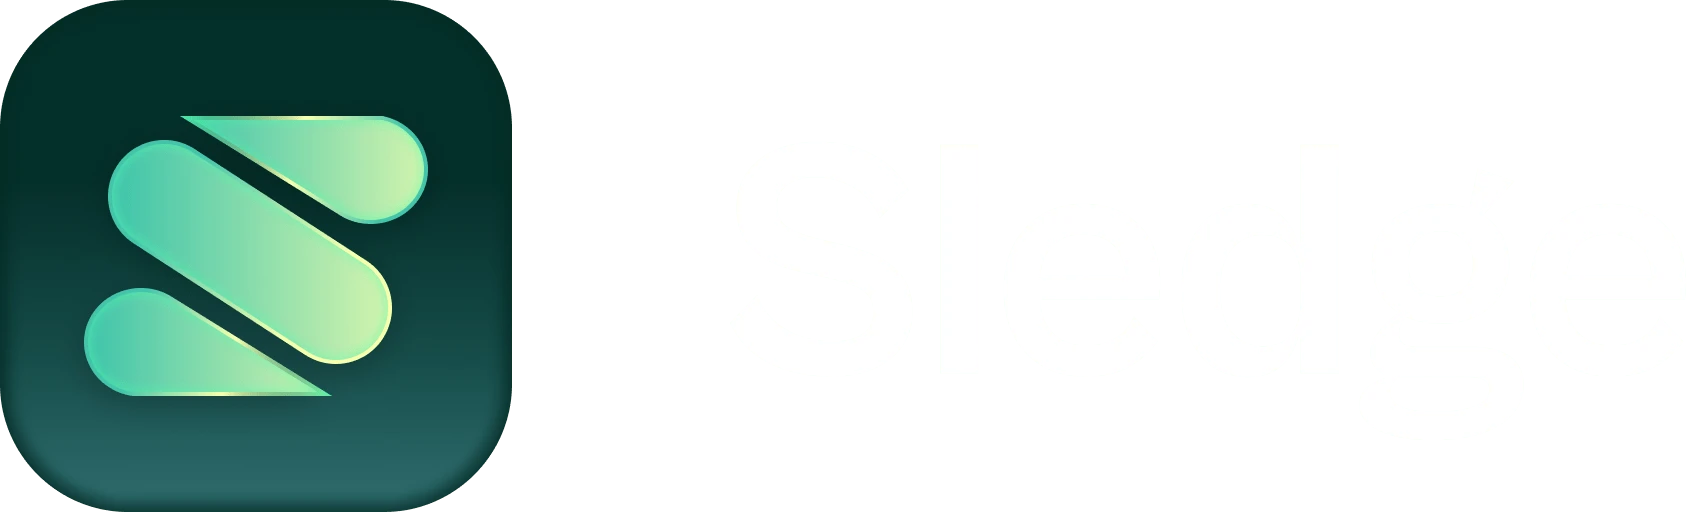 sledge logo